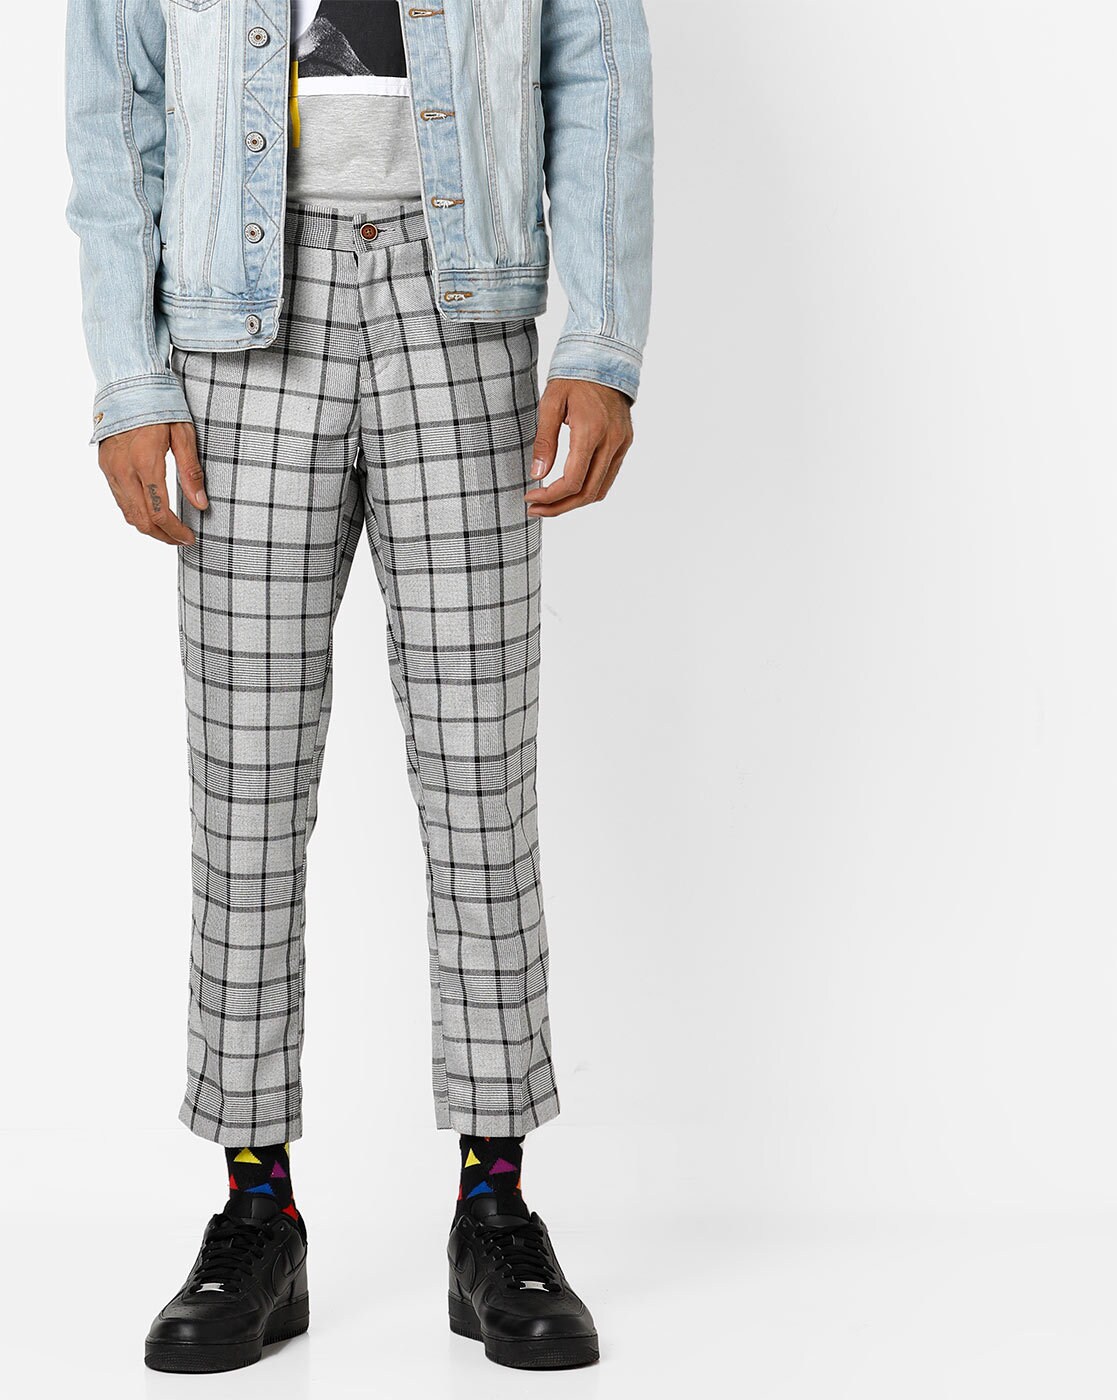 Buy Grey Trousers  Pants for Men by AJIO Online  Ajiocom